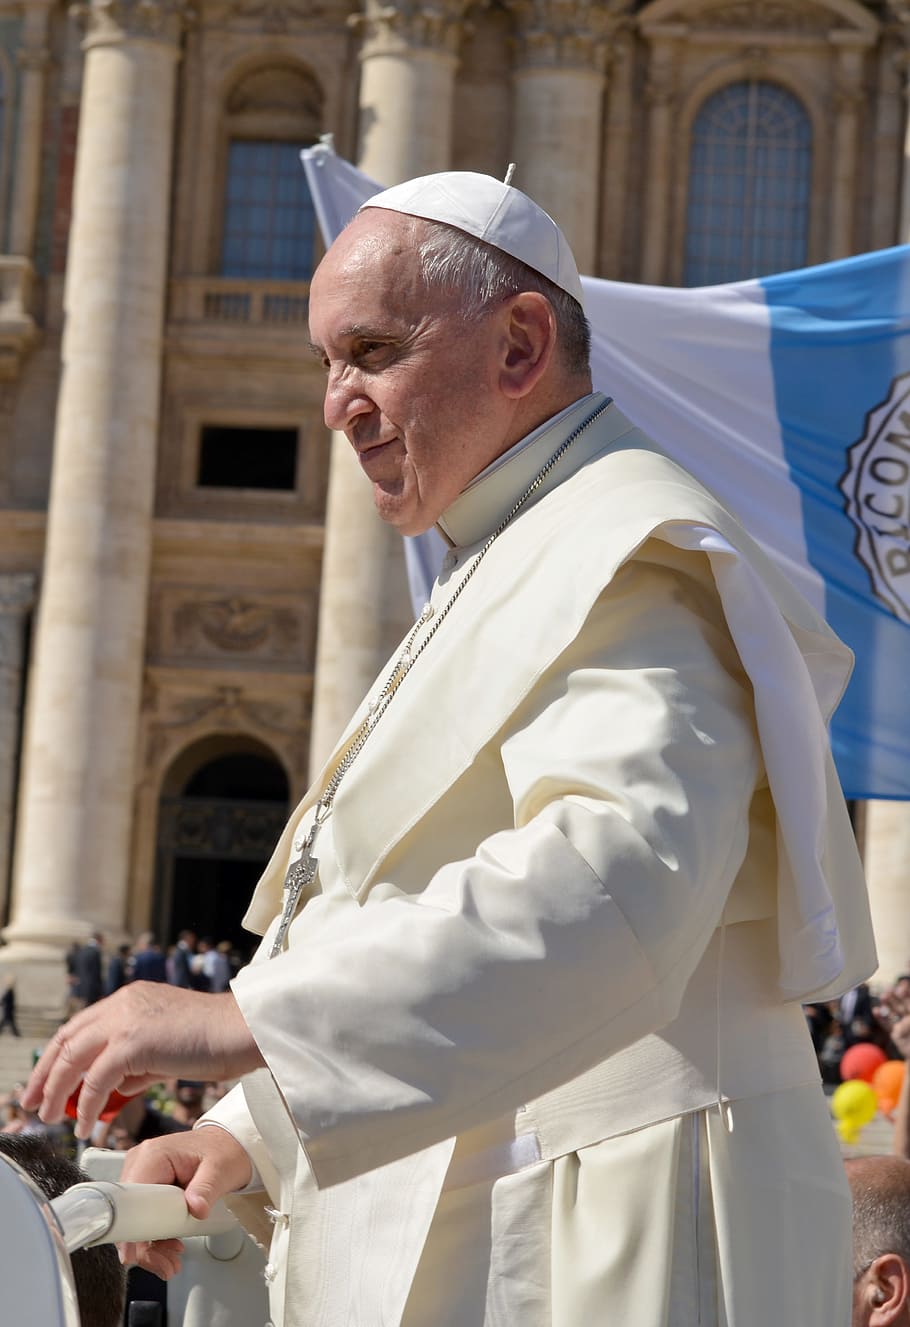 HD wallpaper: Pope Francis standing near flag, pontiff